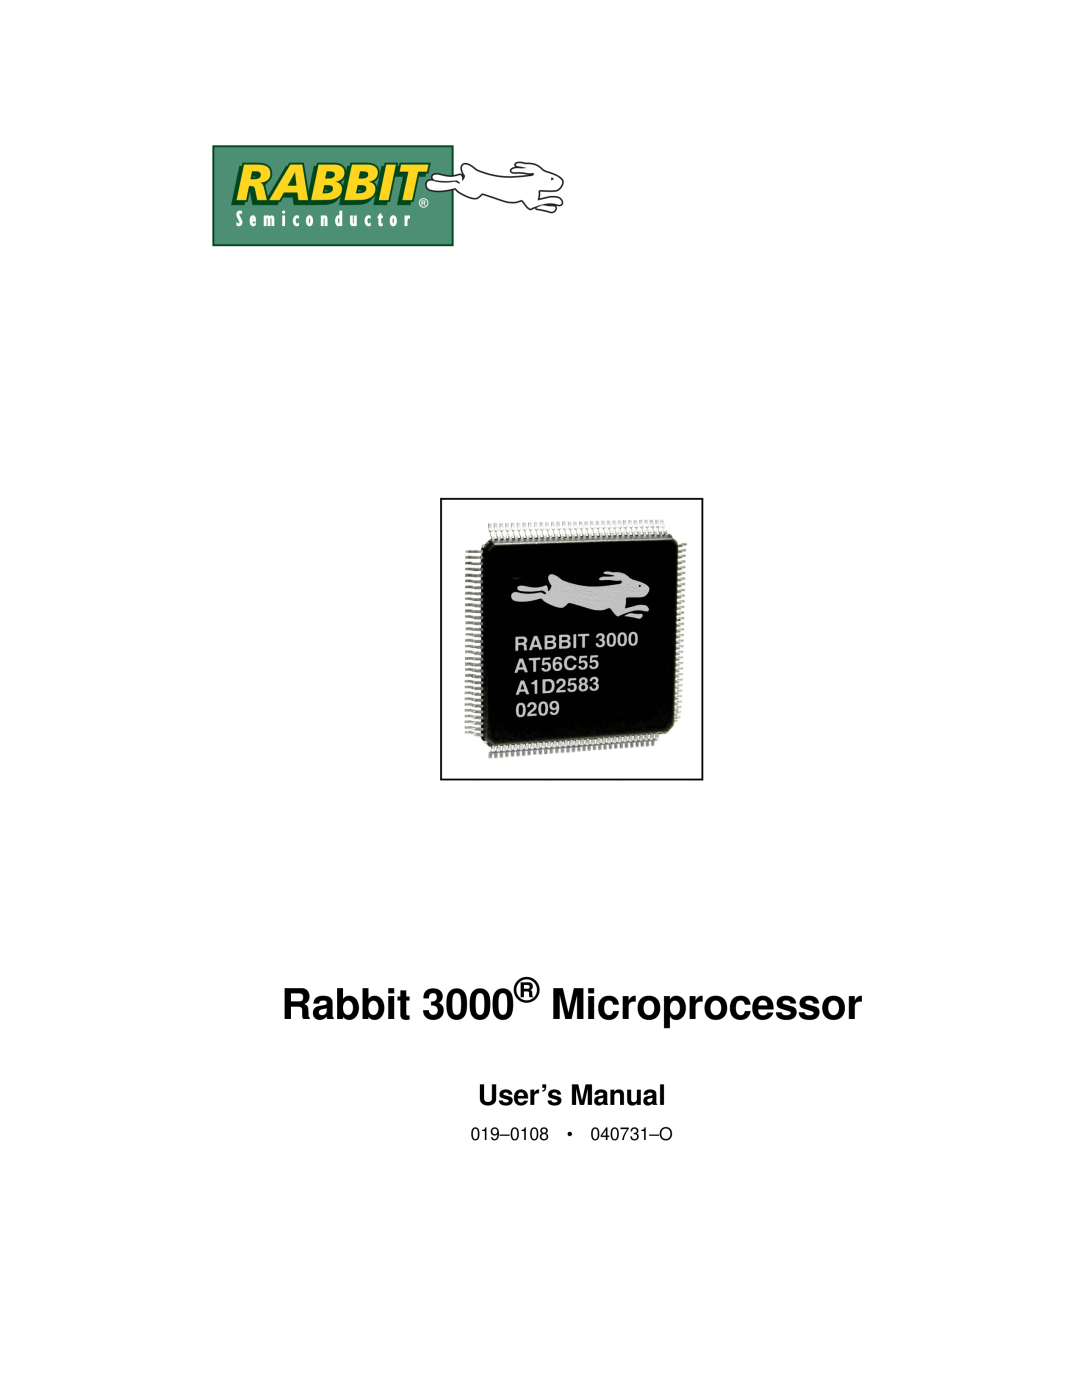 Jameco Electronics 2000 manual Rabbit 3000 Microprocessor, User’s Manual 